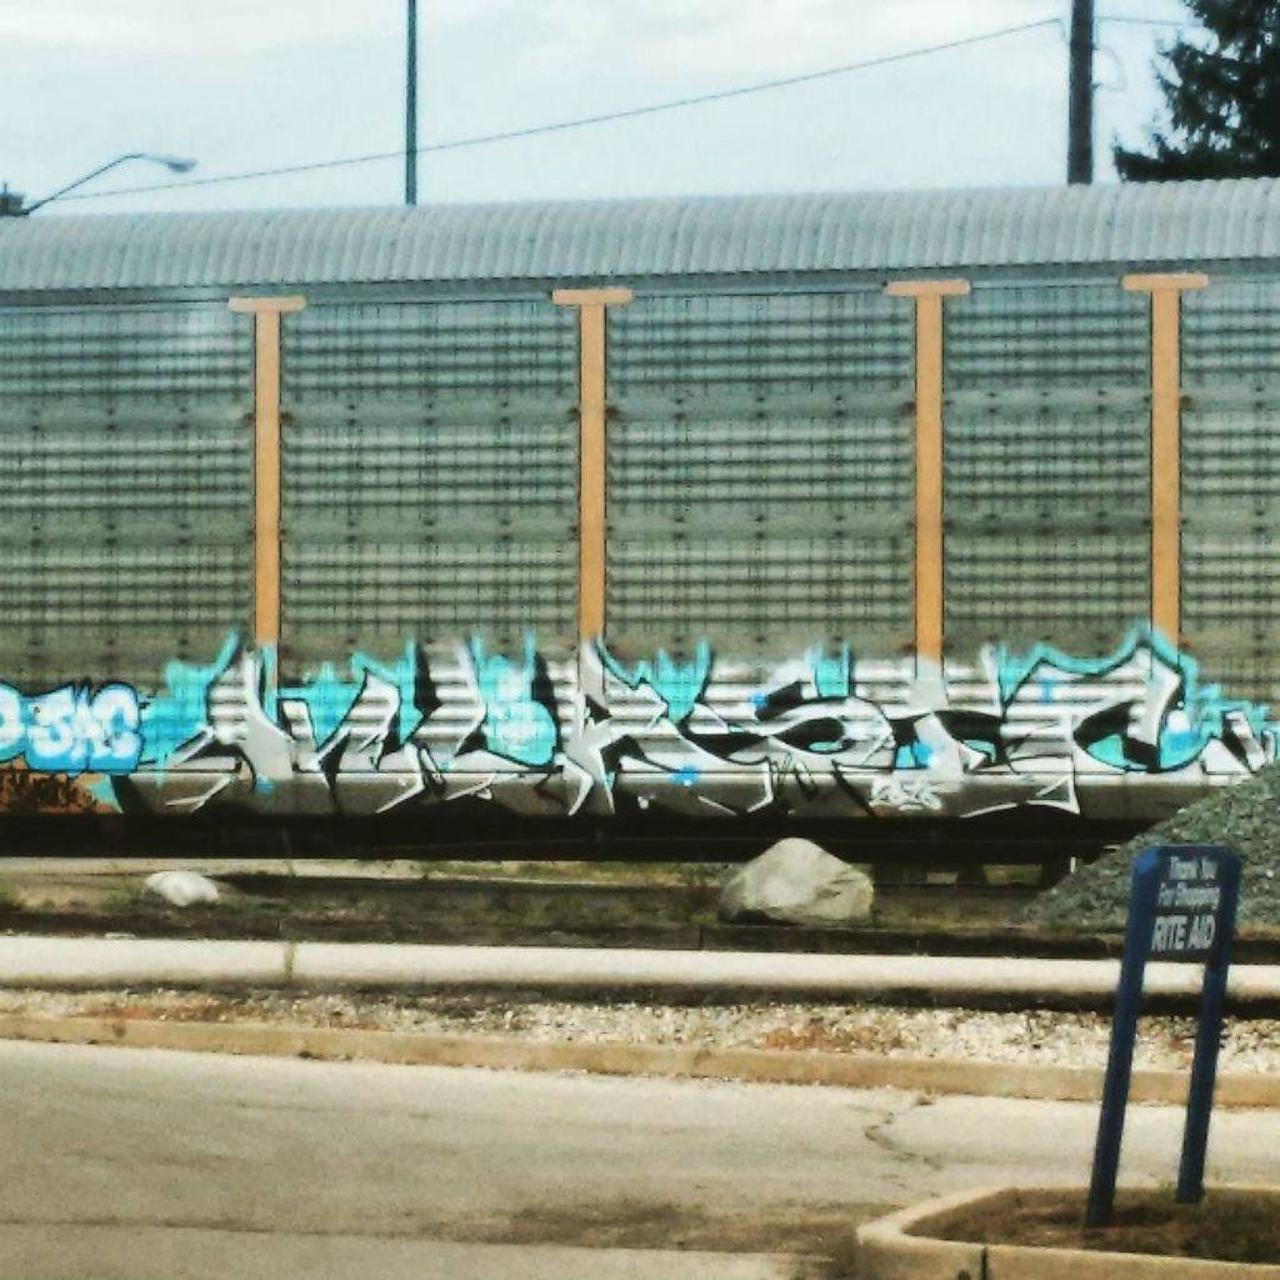 RT @artpushr: via #ambys_addiction "http://ift.tt/1VhiBGS" #graffiti #streetart http://t.co/9JO3fIXjHF